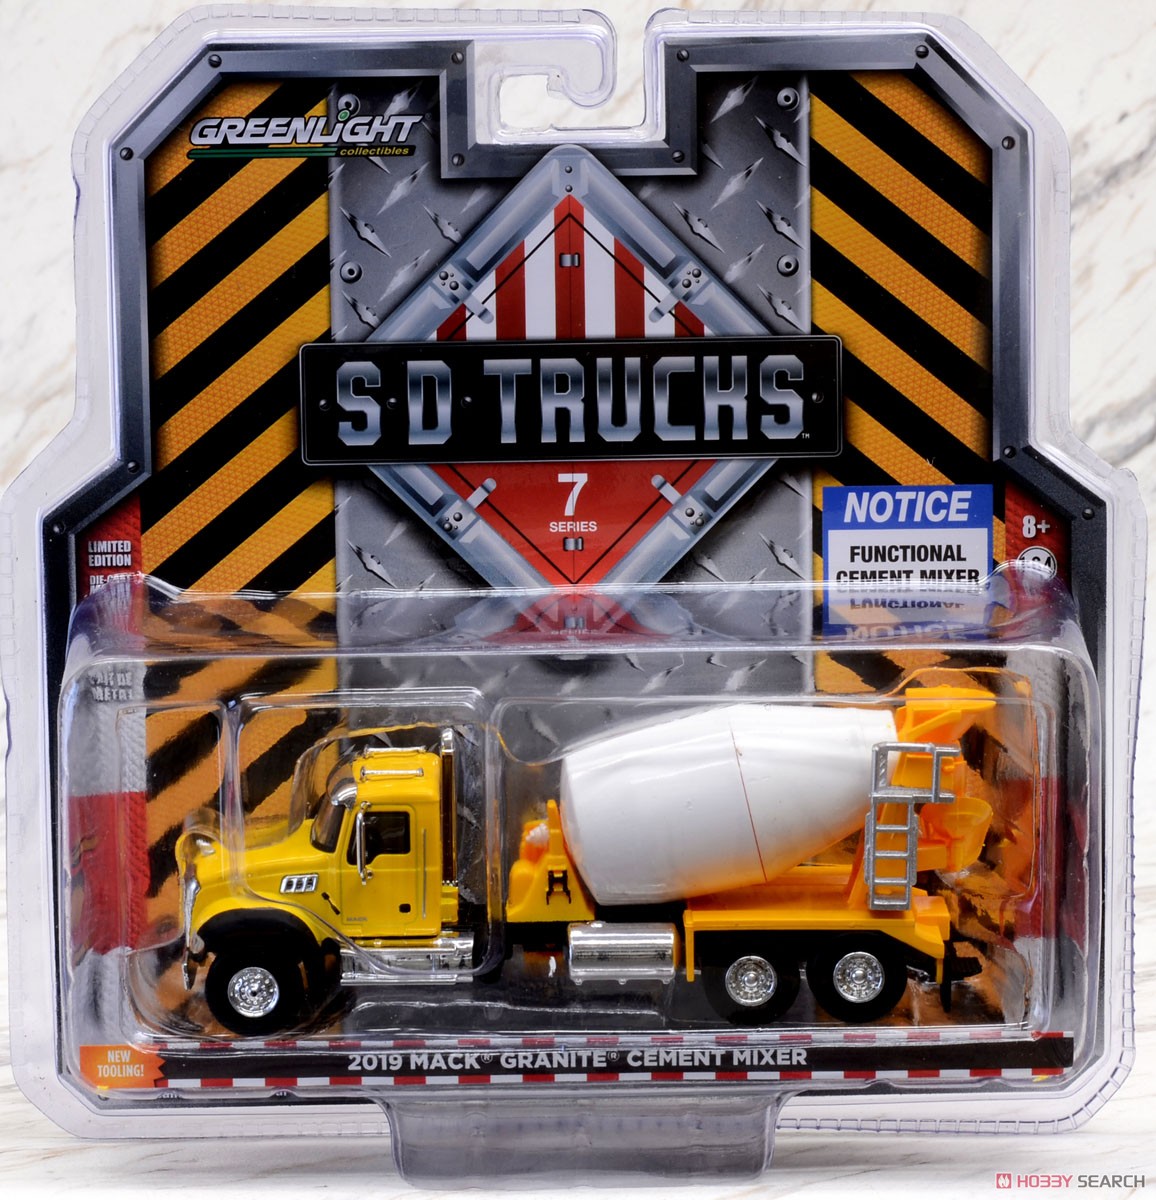 S.D.Trucks Series 7 (ミニカー) パッケージ2